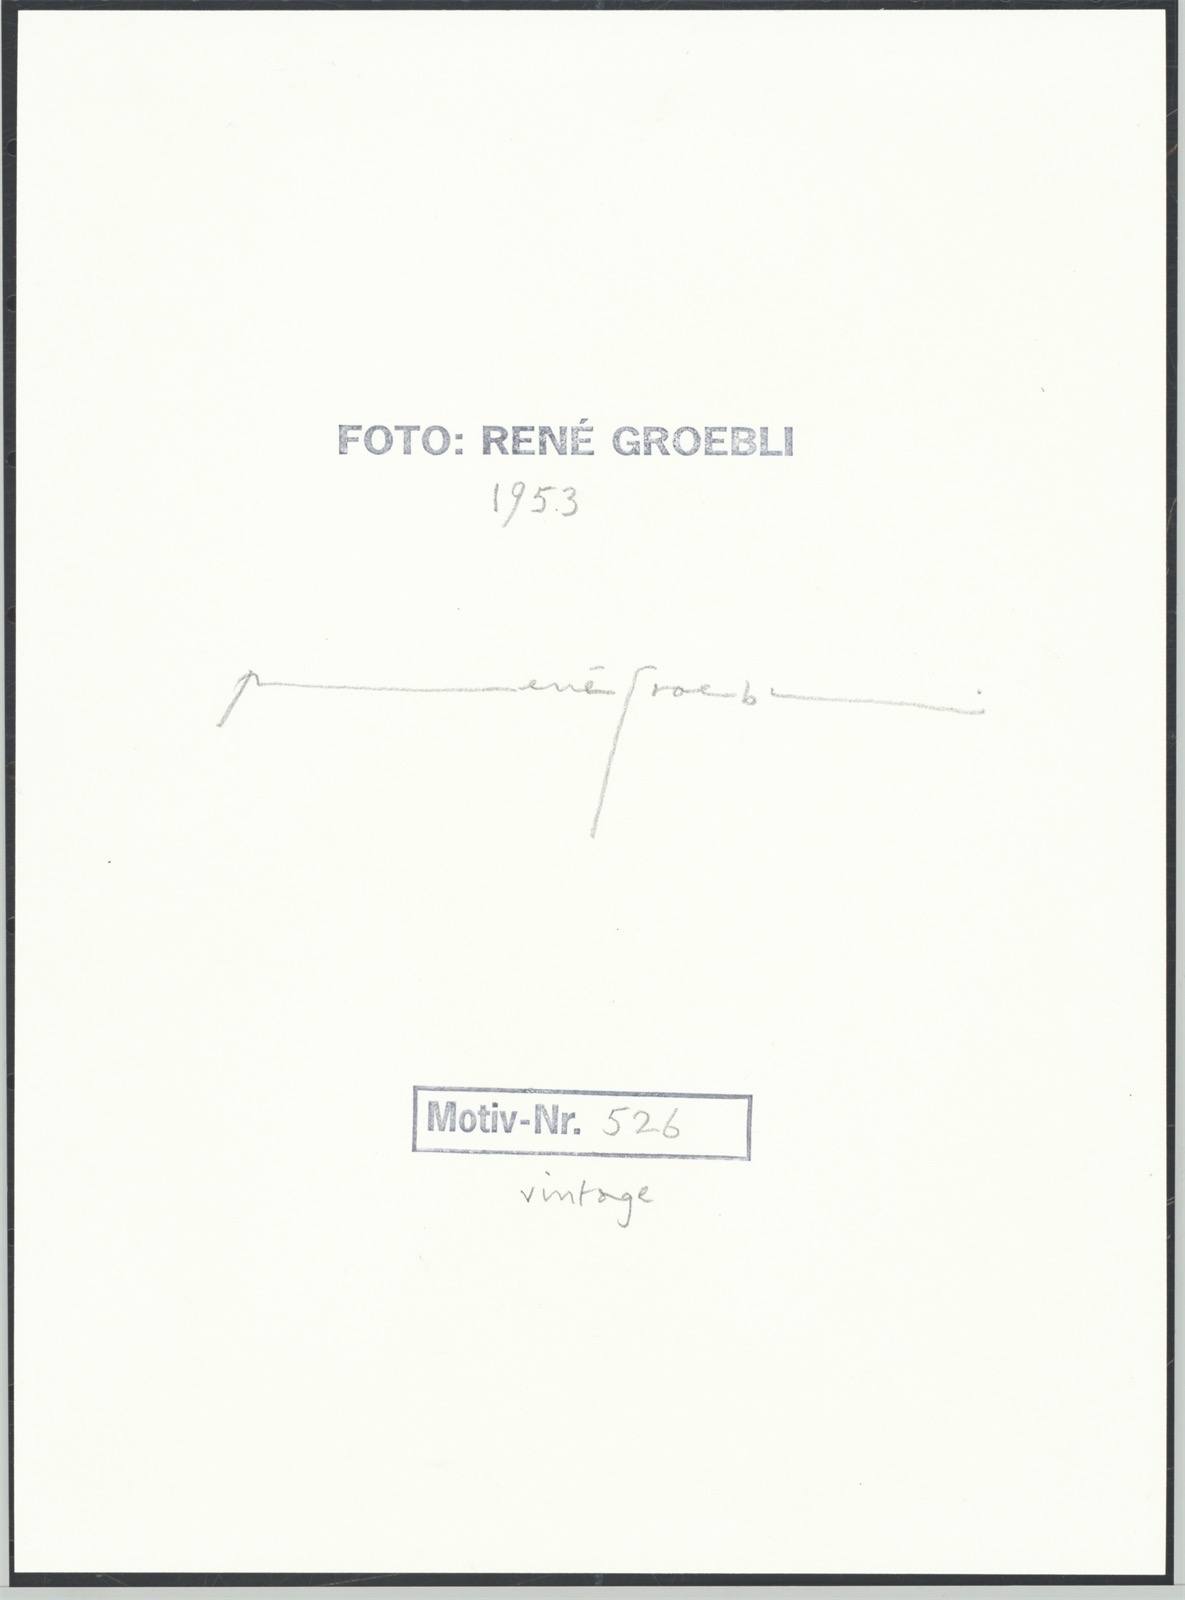 René Groebli. # 526, from the series ”Das Auge der Liebe”, Paris. 1952 - Image 3 of 4